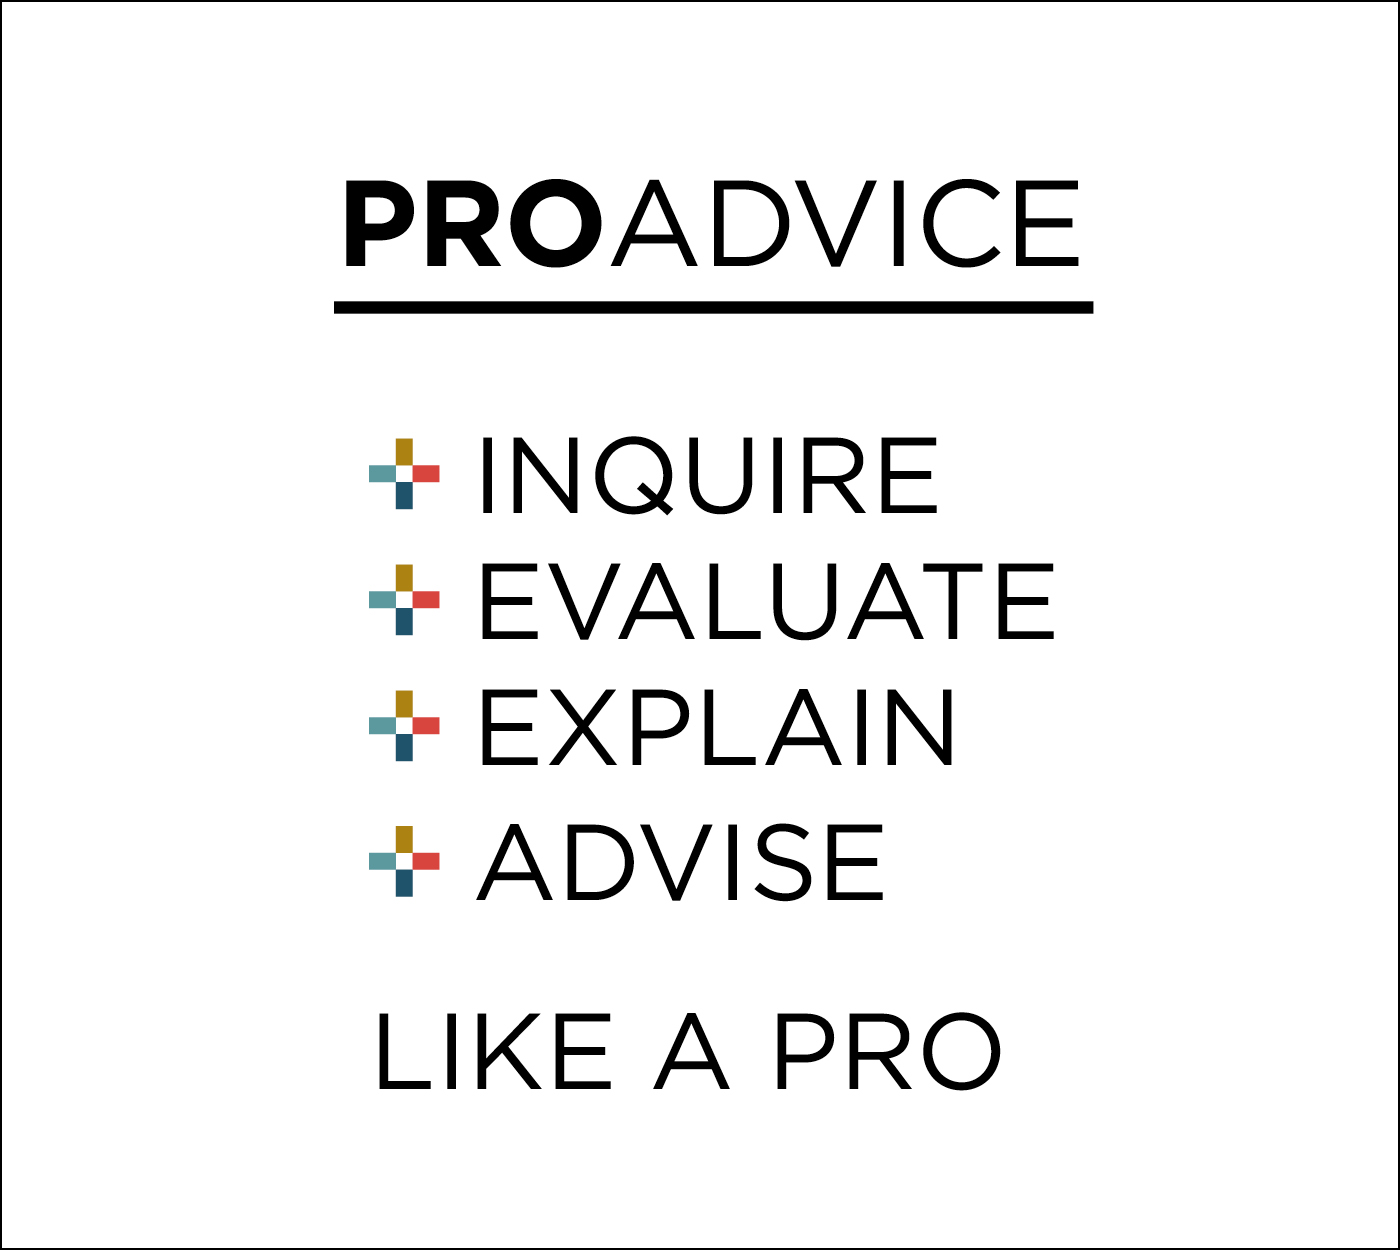 "proadvice"